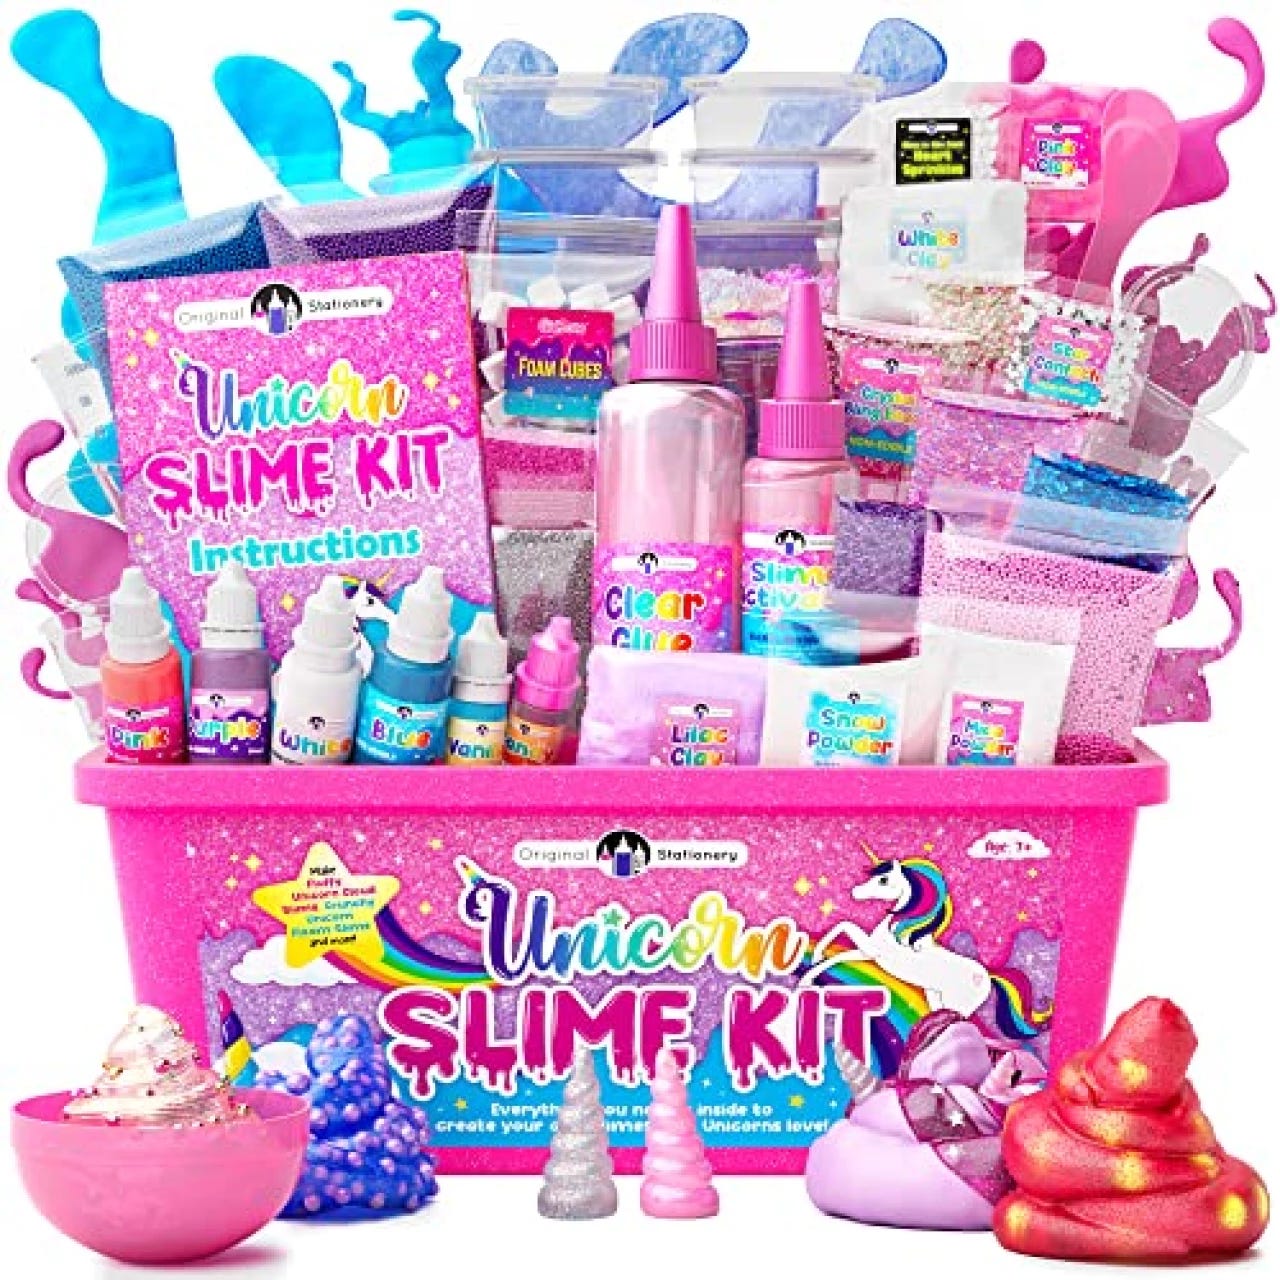 2023 Highlights: Unicorn Art Supplies & Slime Kits for Girls, by Emma, Nov, 2023